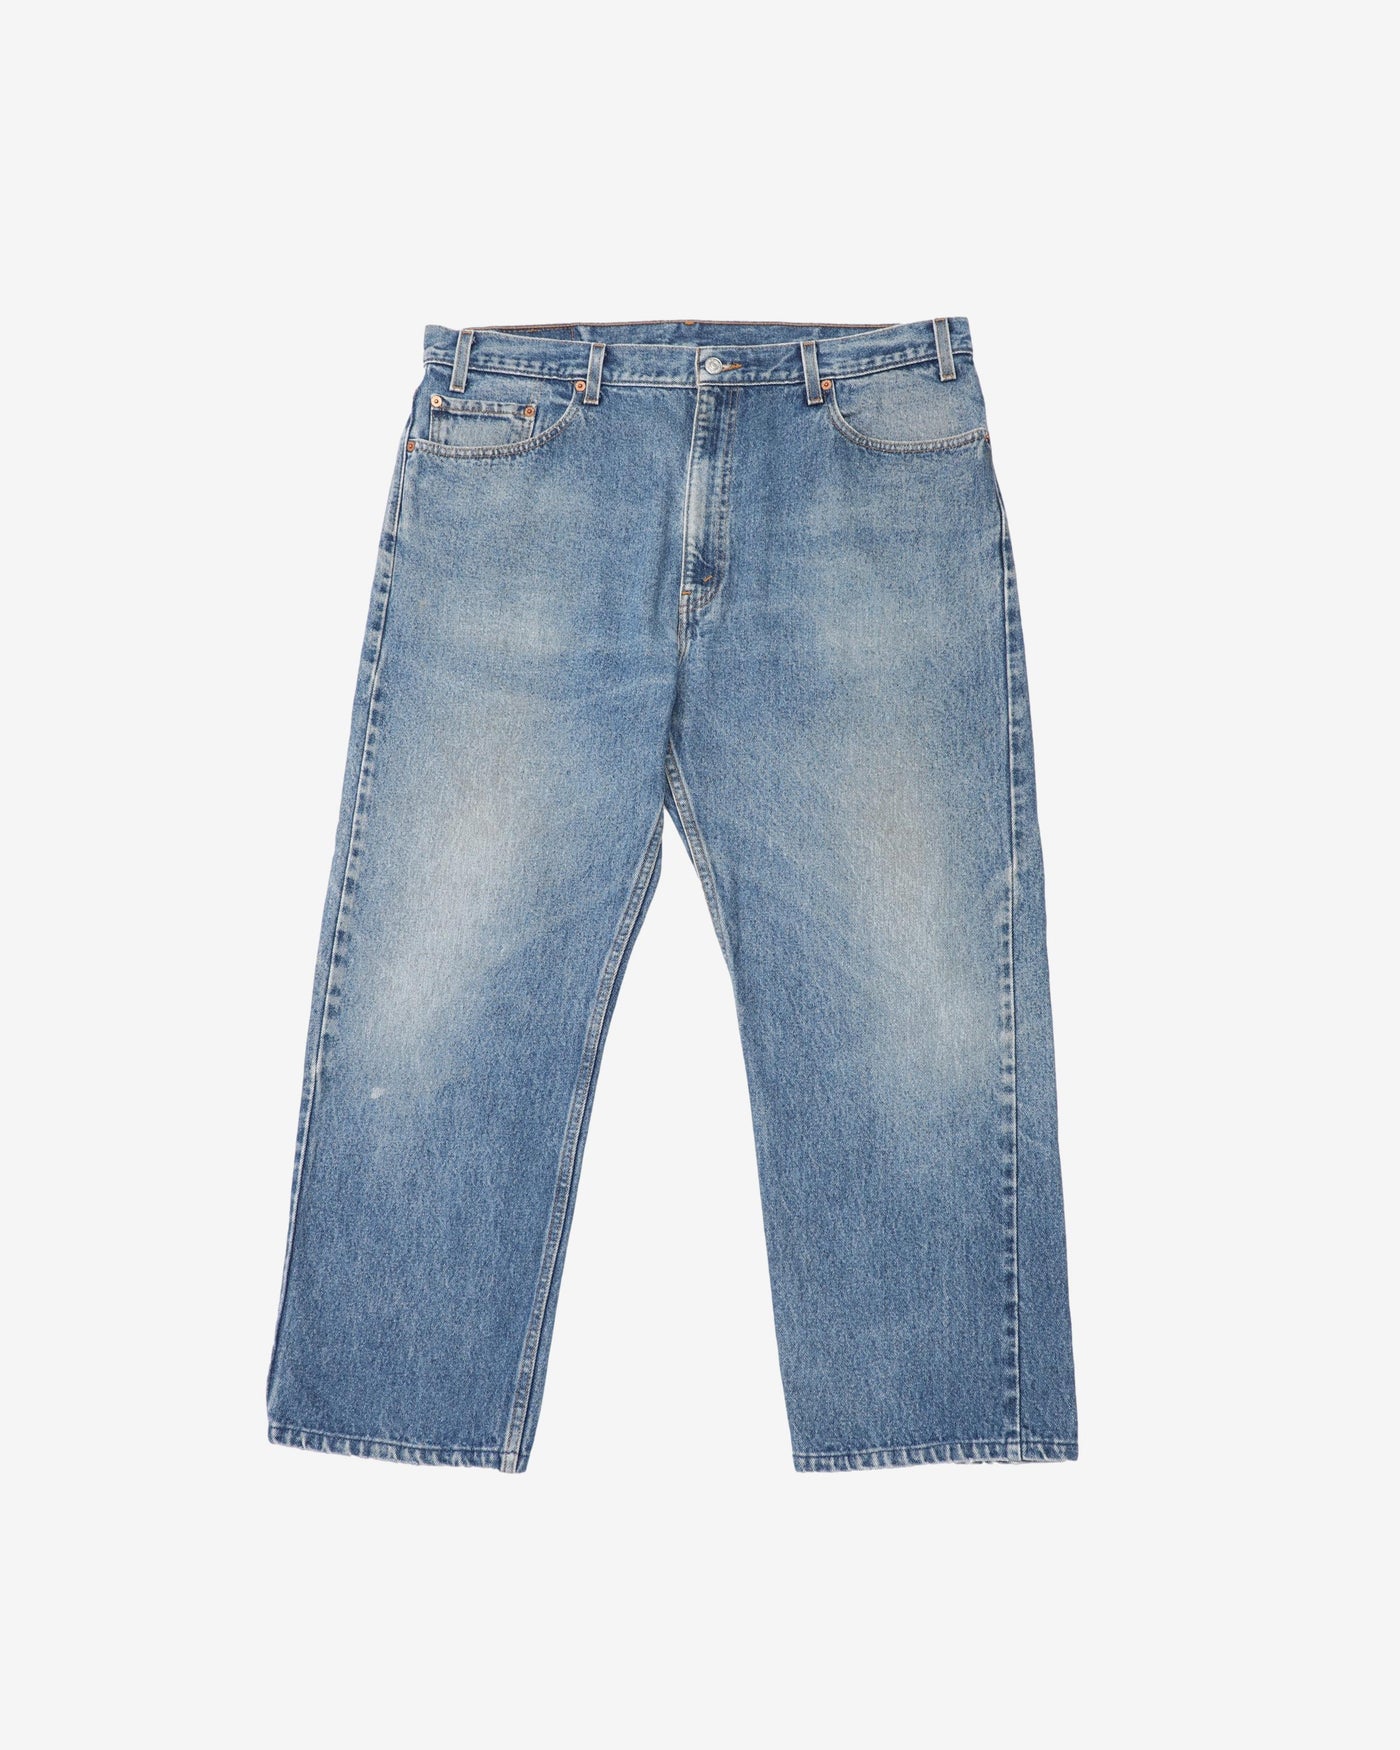 Vintage 80s Levi's Washed Blue Denim Jeans - W40 L27